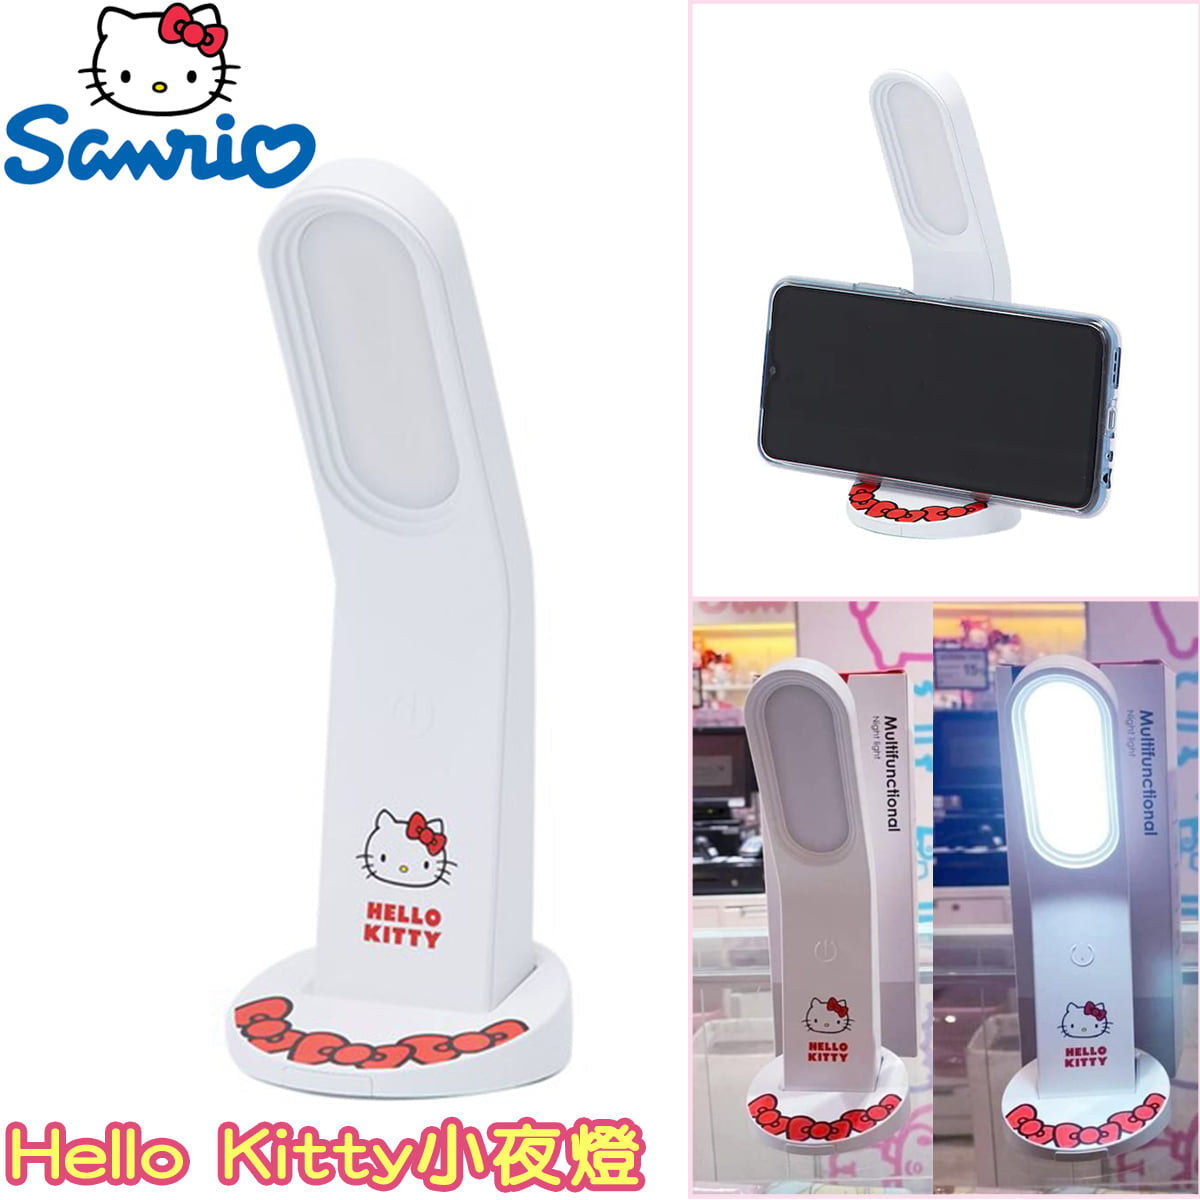 Desk Lamp Sanrio Hello Kitty (Thailand Edition)